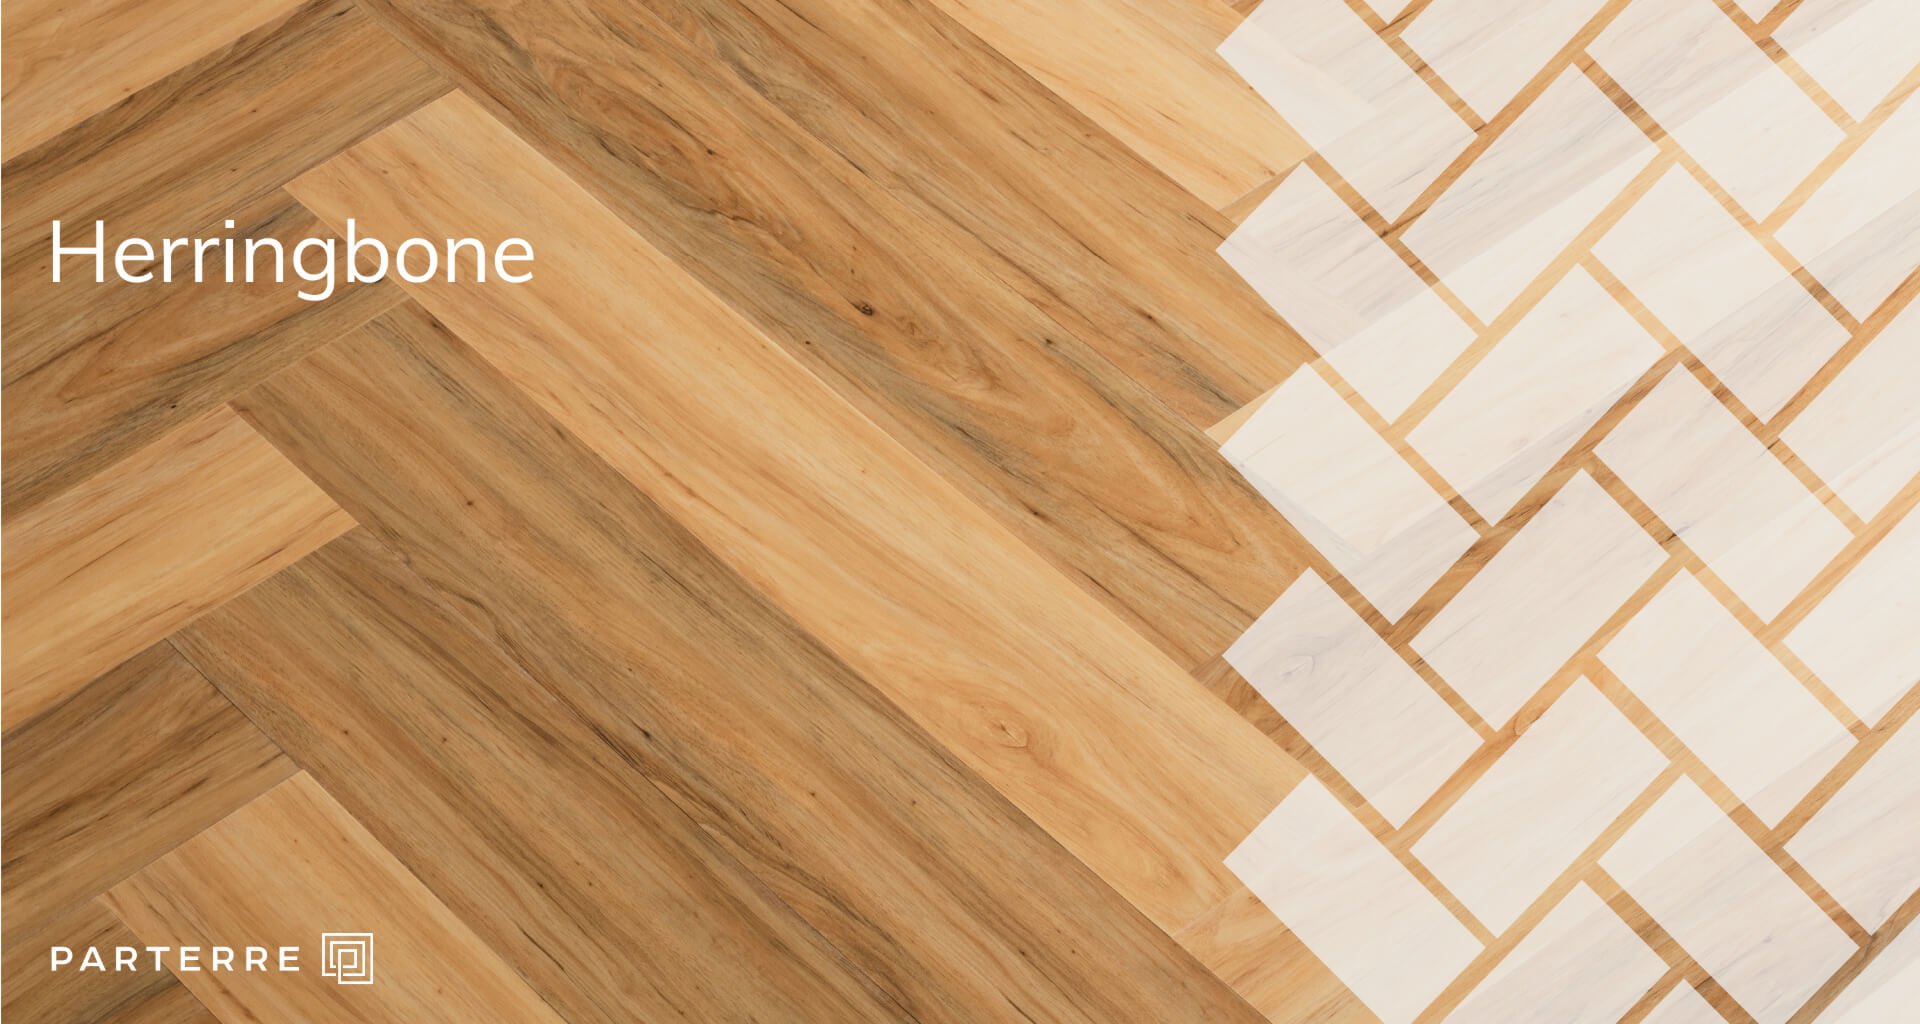 9 Vinyl Flooring Patterns For Your Next, Designer Vinyl Plank Flooring